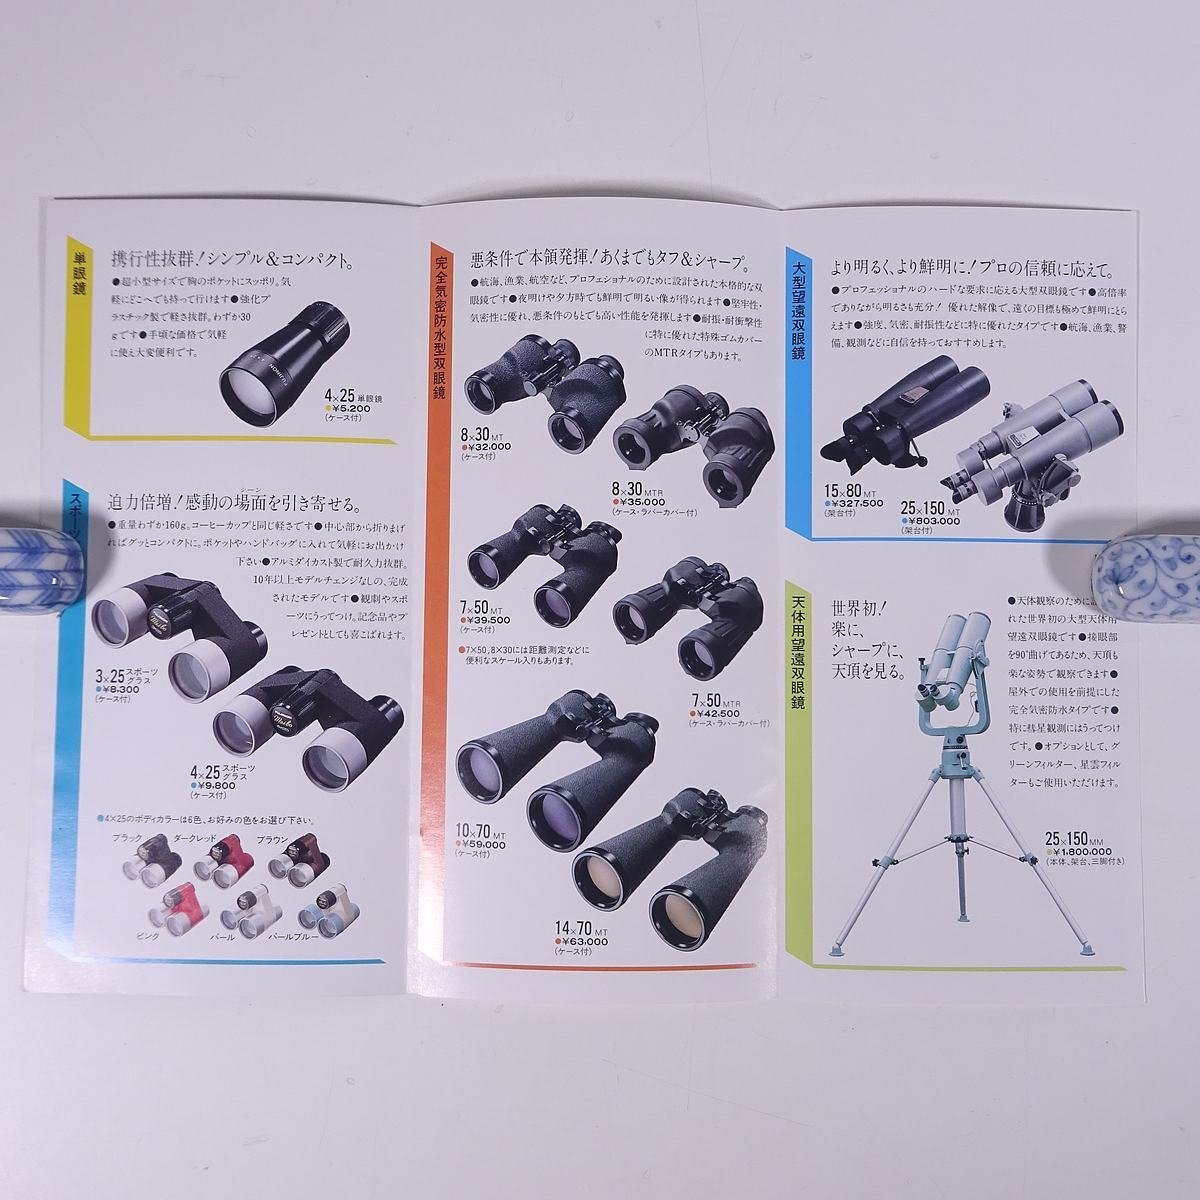 FUJINON Fuji non binoculars Fuji photograph light machine corporation 1985 Showa era small booklet catalog pamphlet binoculars outdoor 